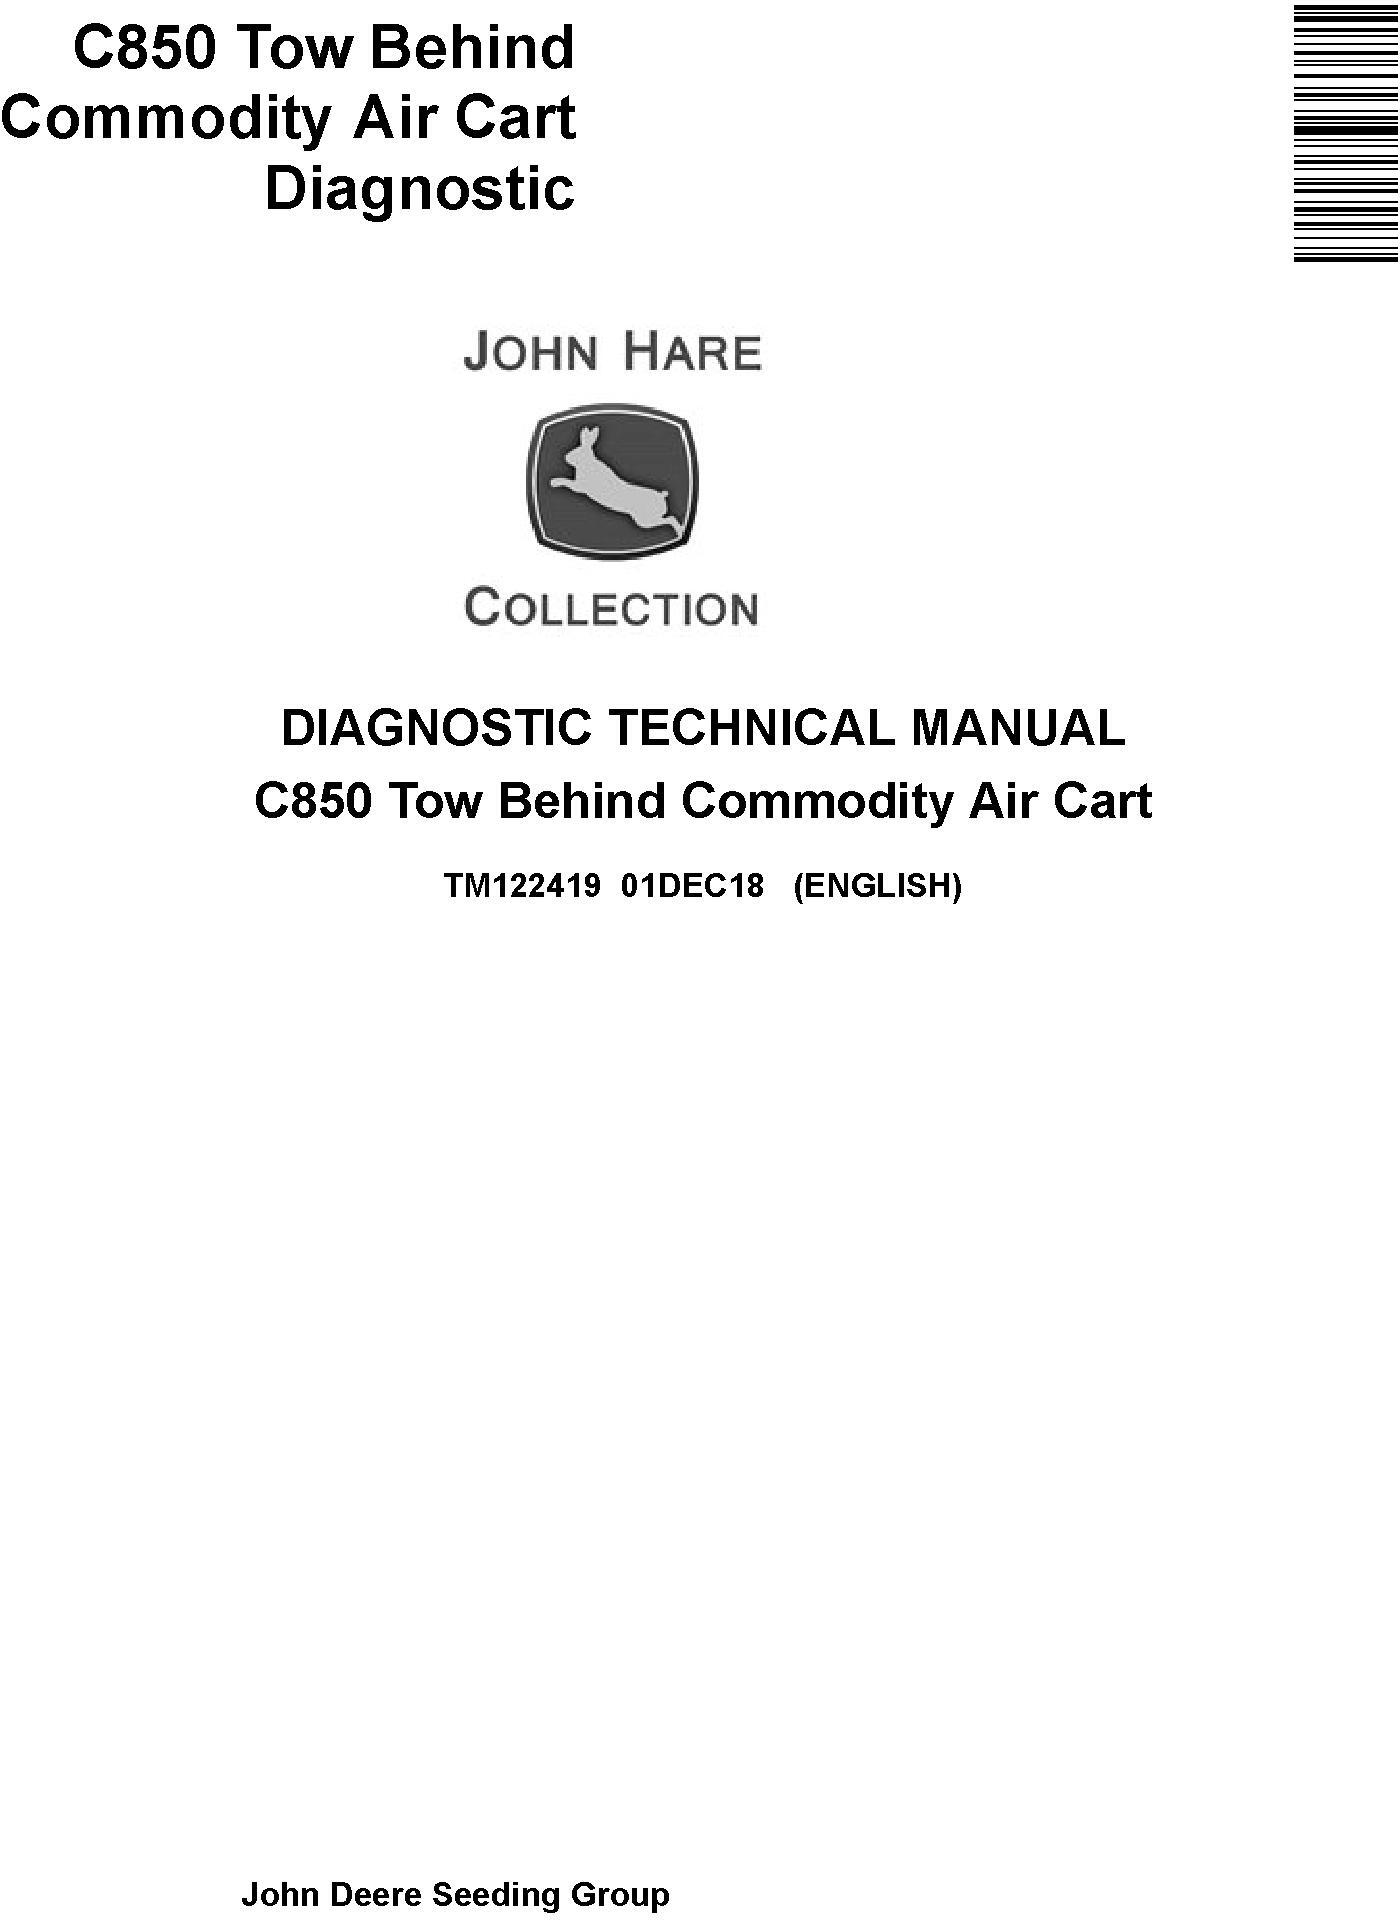 John Deere C850 Tow Behind Commodity Air Cart Diagnostic Technical Manual (TM122419)